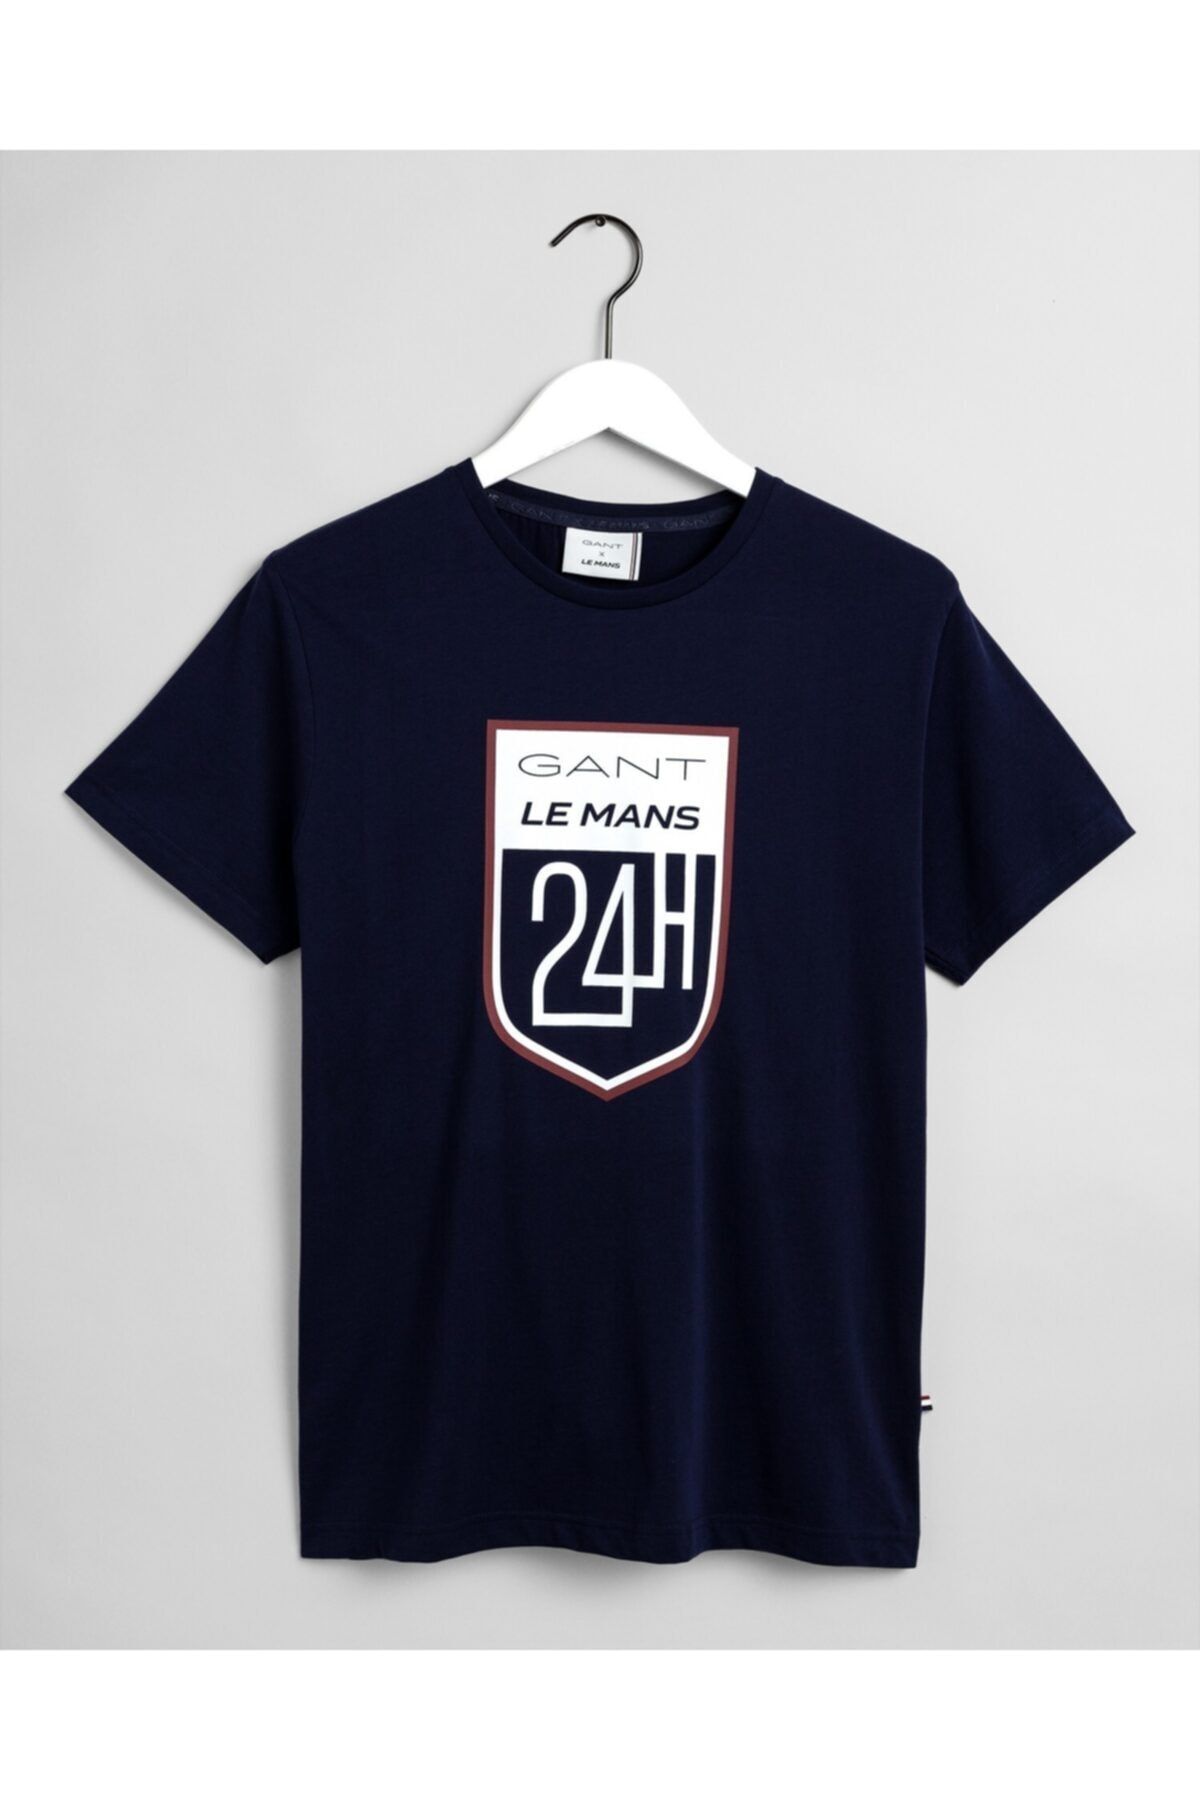 Gant X Le Mans Erkek T-shirt - Lacivert